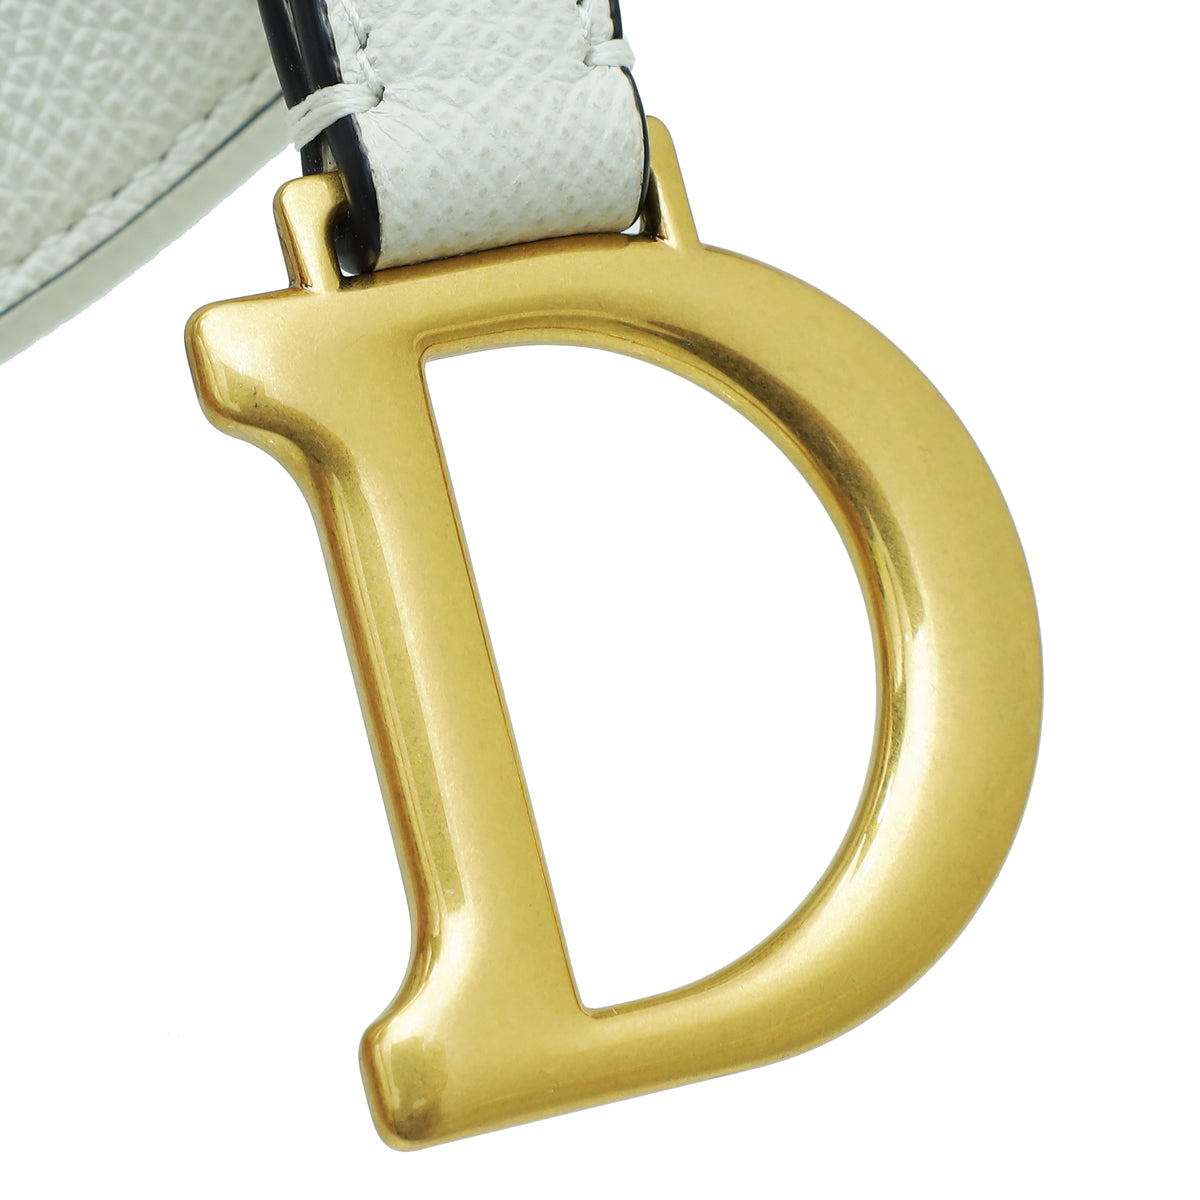 Christian Dior Bicolor Saddle Mini Bag